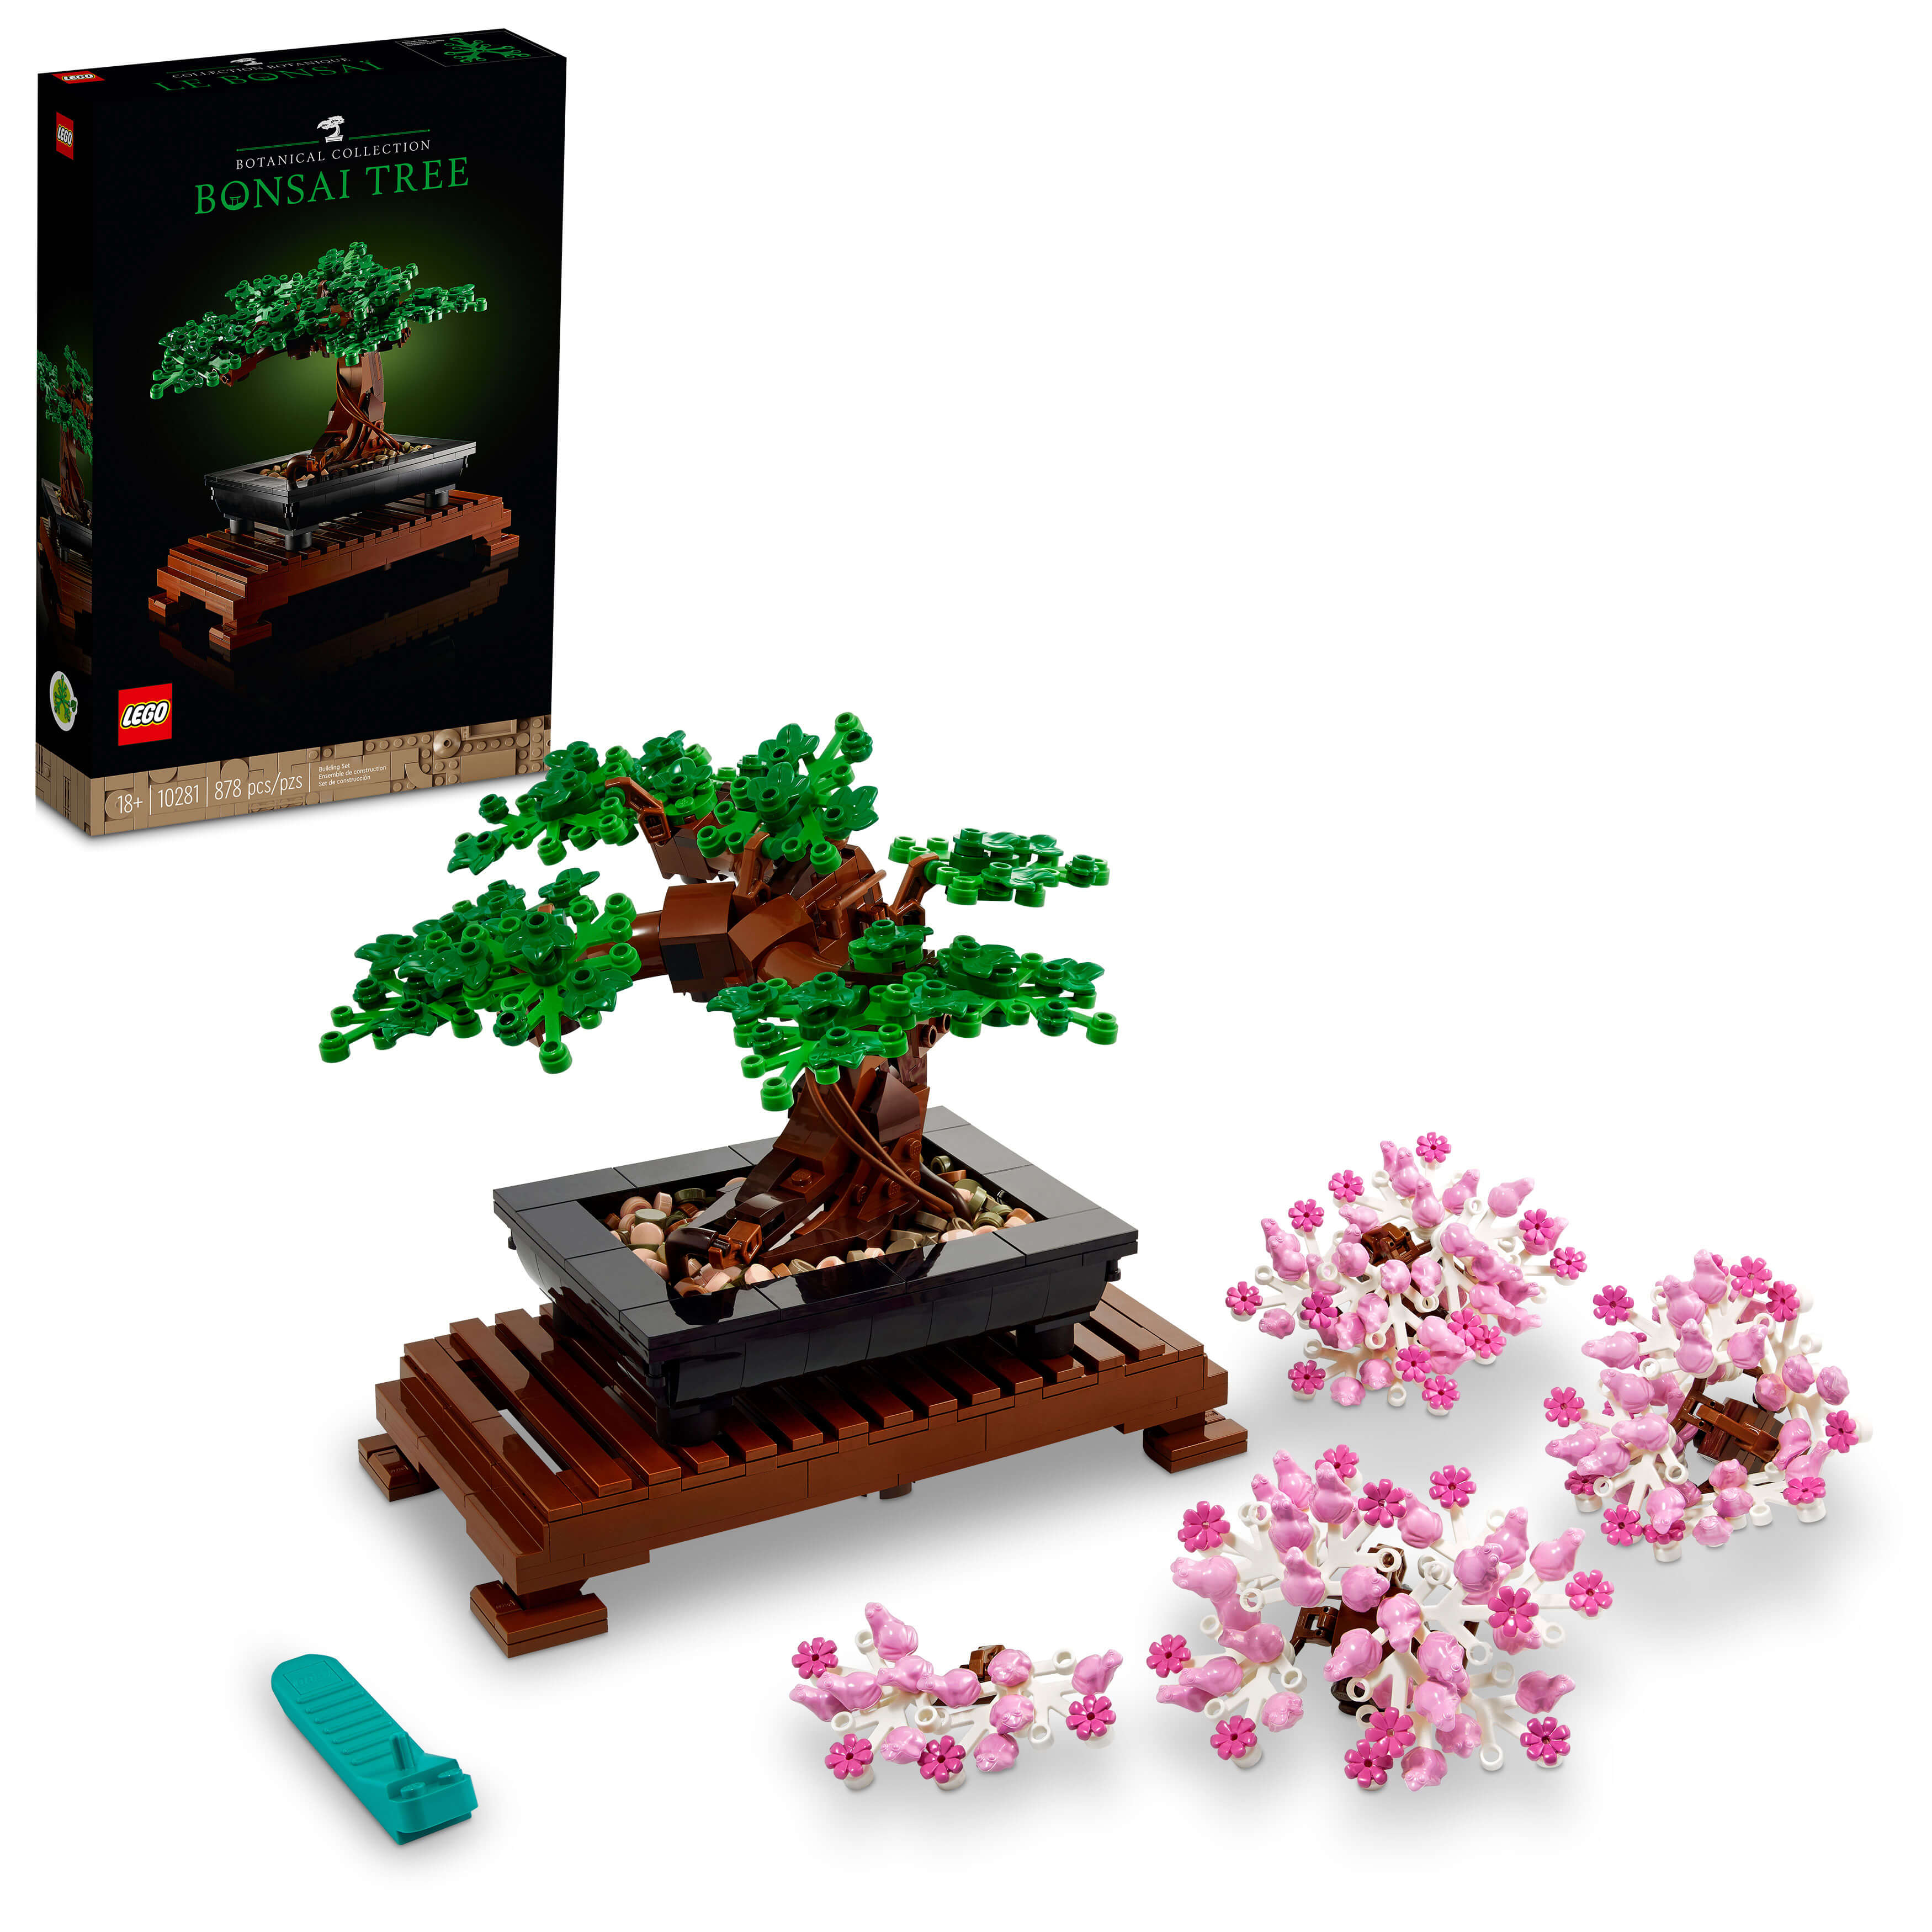 LEGO® Bonsai Tree 10281 Building Kit (878 Pieces)